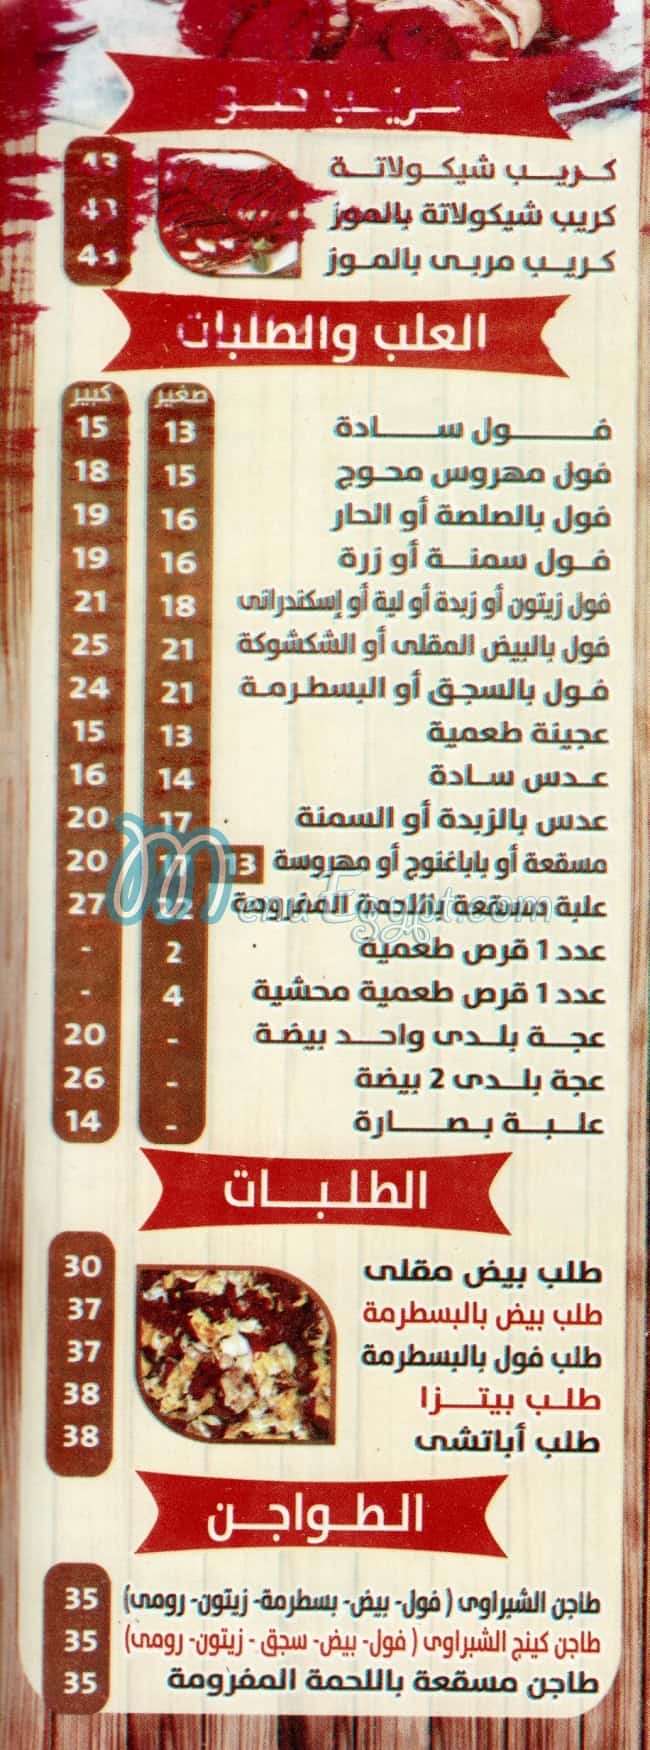 EL SHABRAWY Khatam El Morsaleen online menu